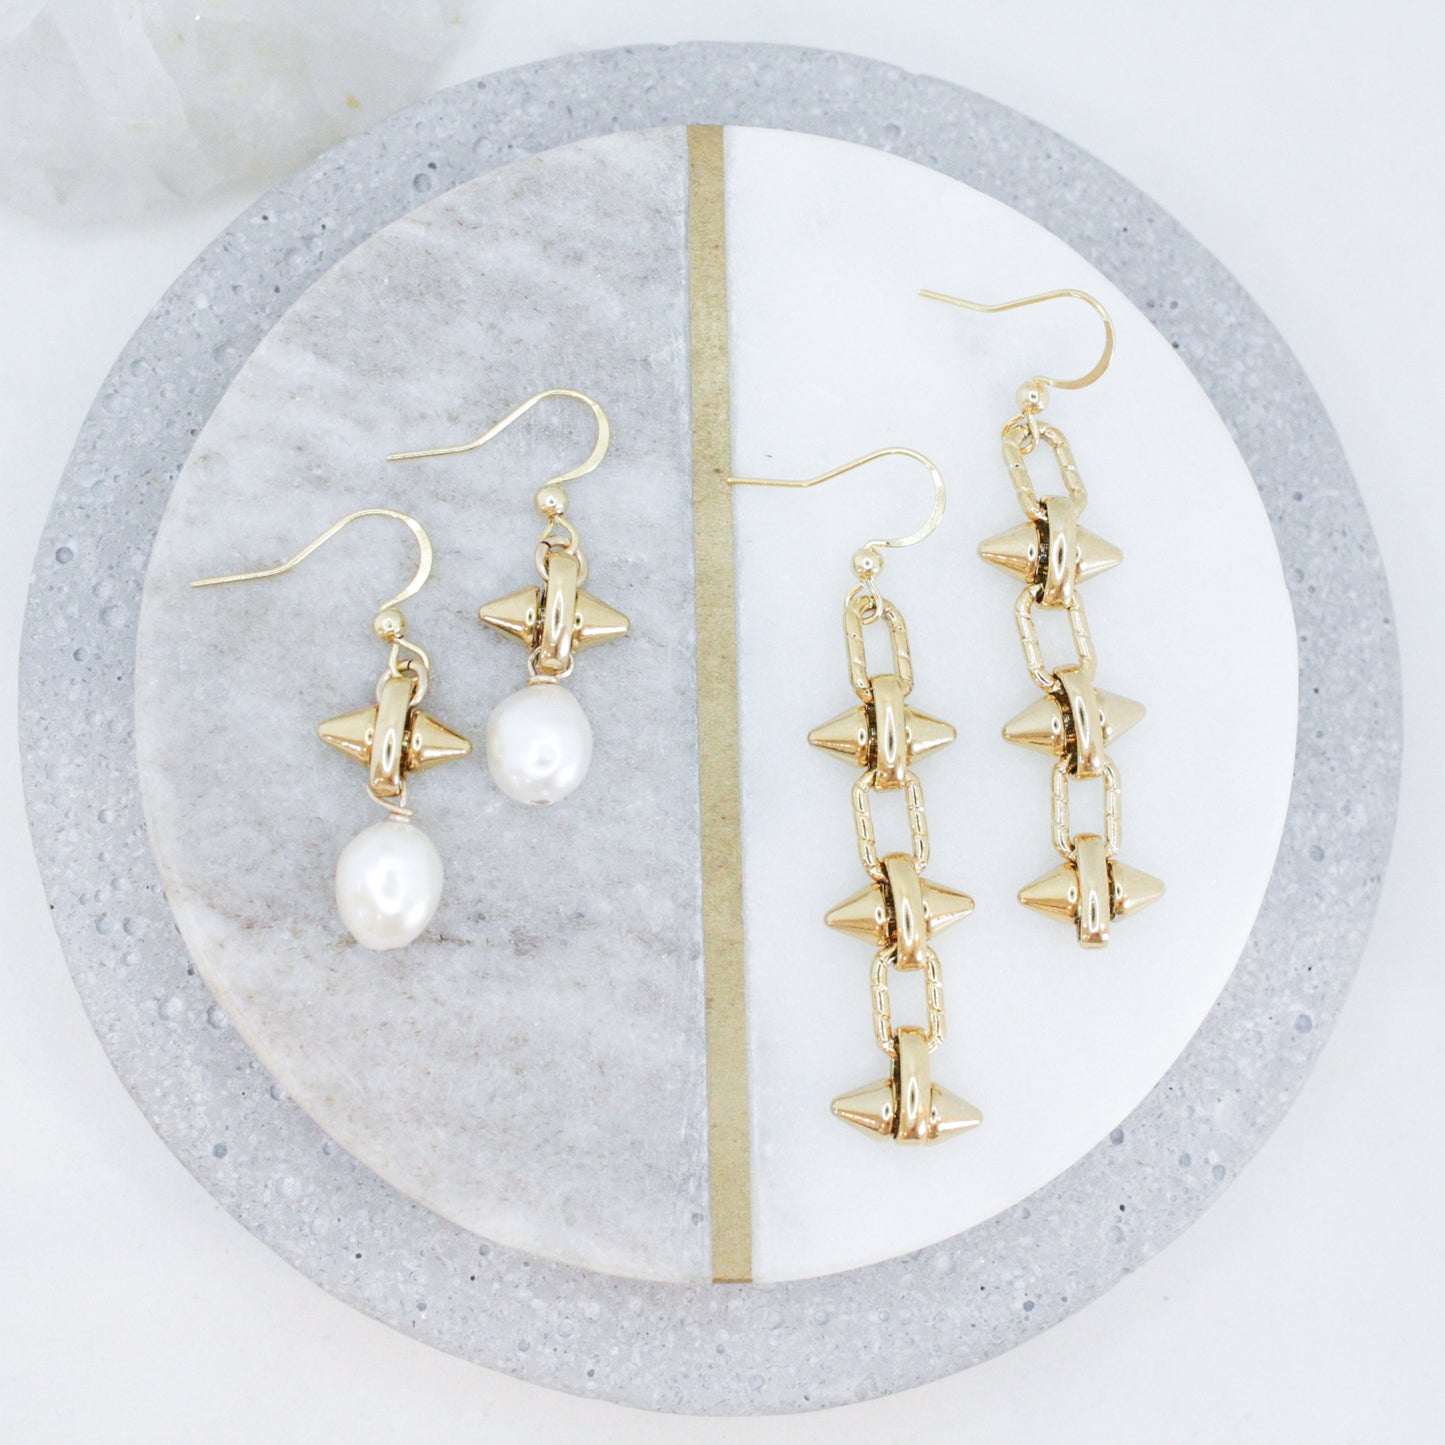 Andi Pearl & Spike Earrings :: 24k Gold Filled